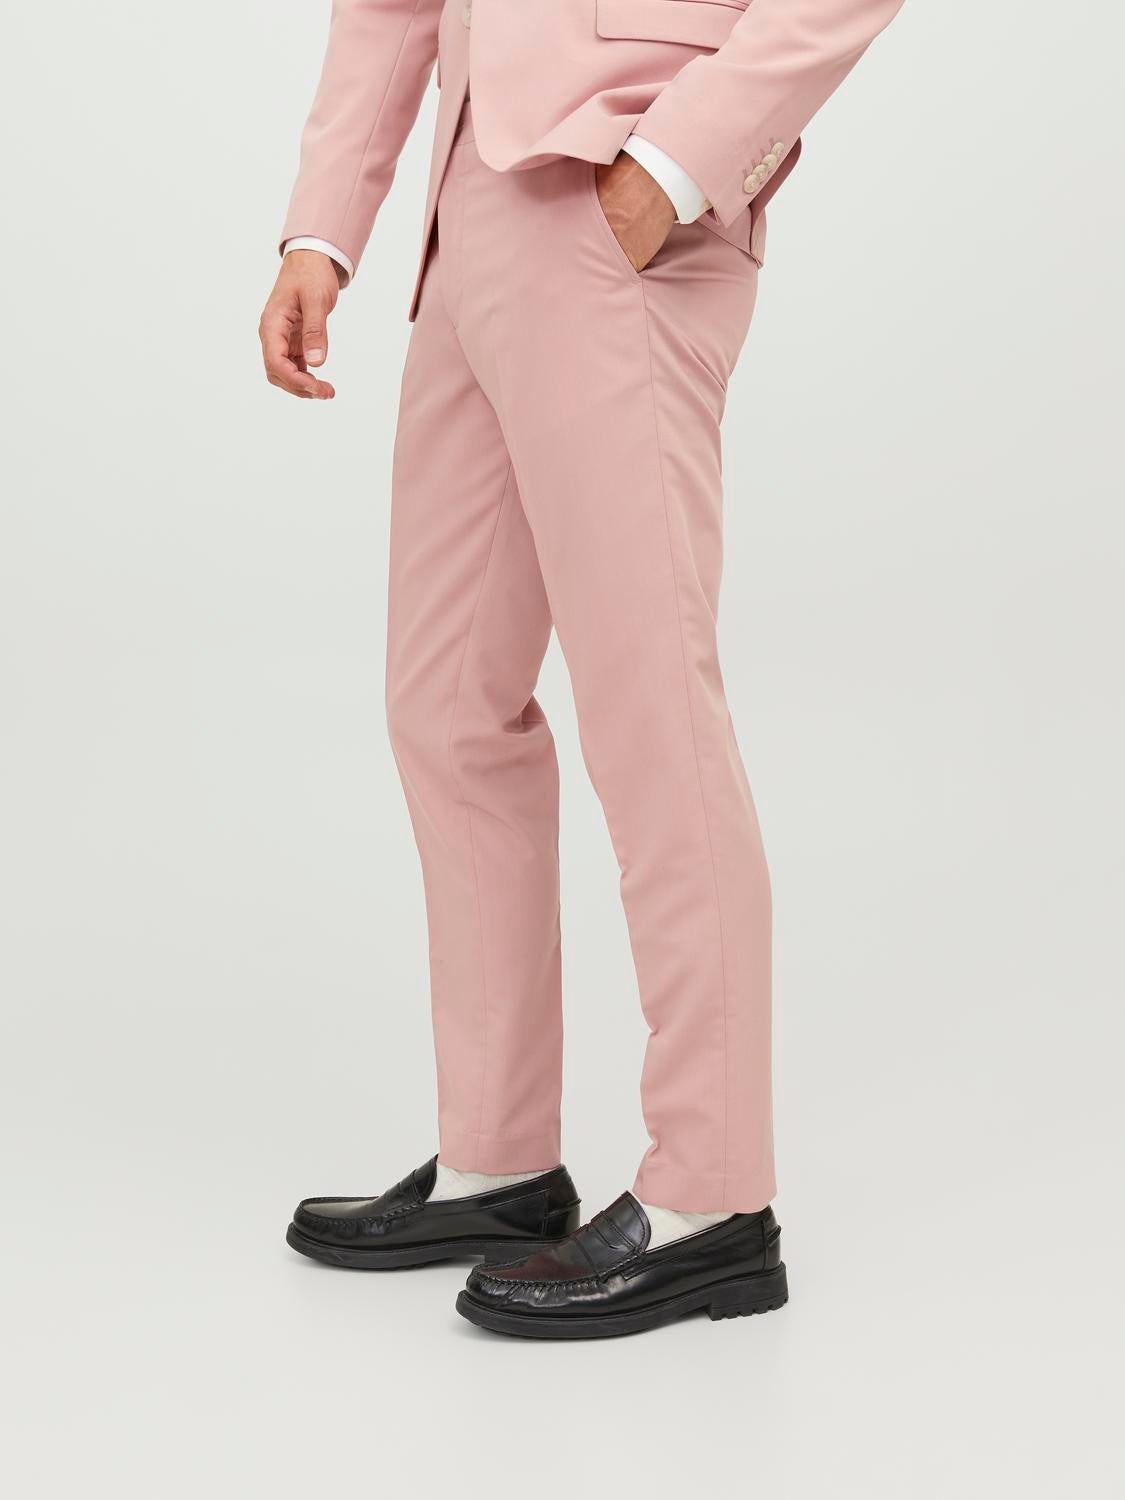 Skinny Fit Suit Pants - Light pink - Men